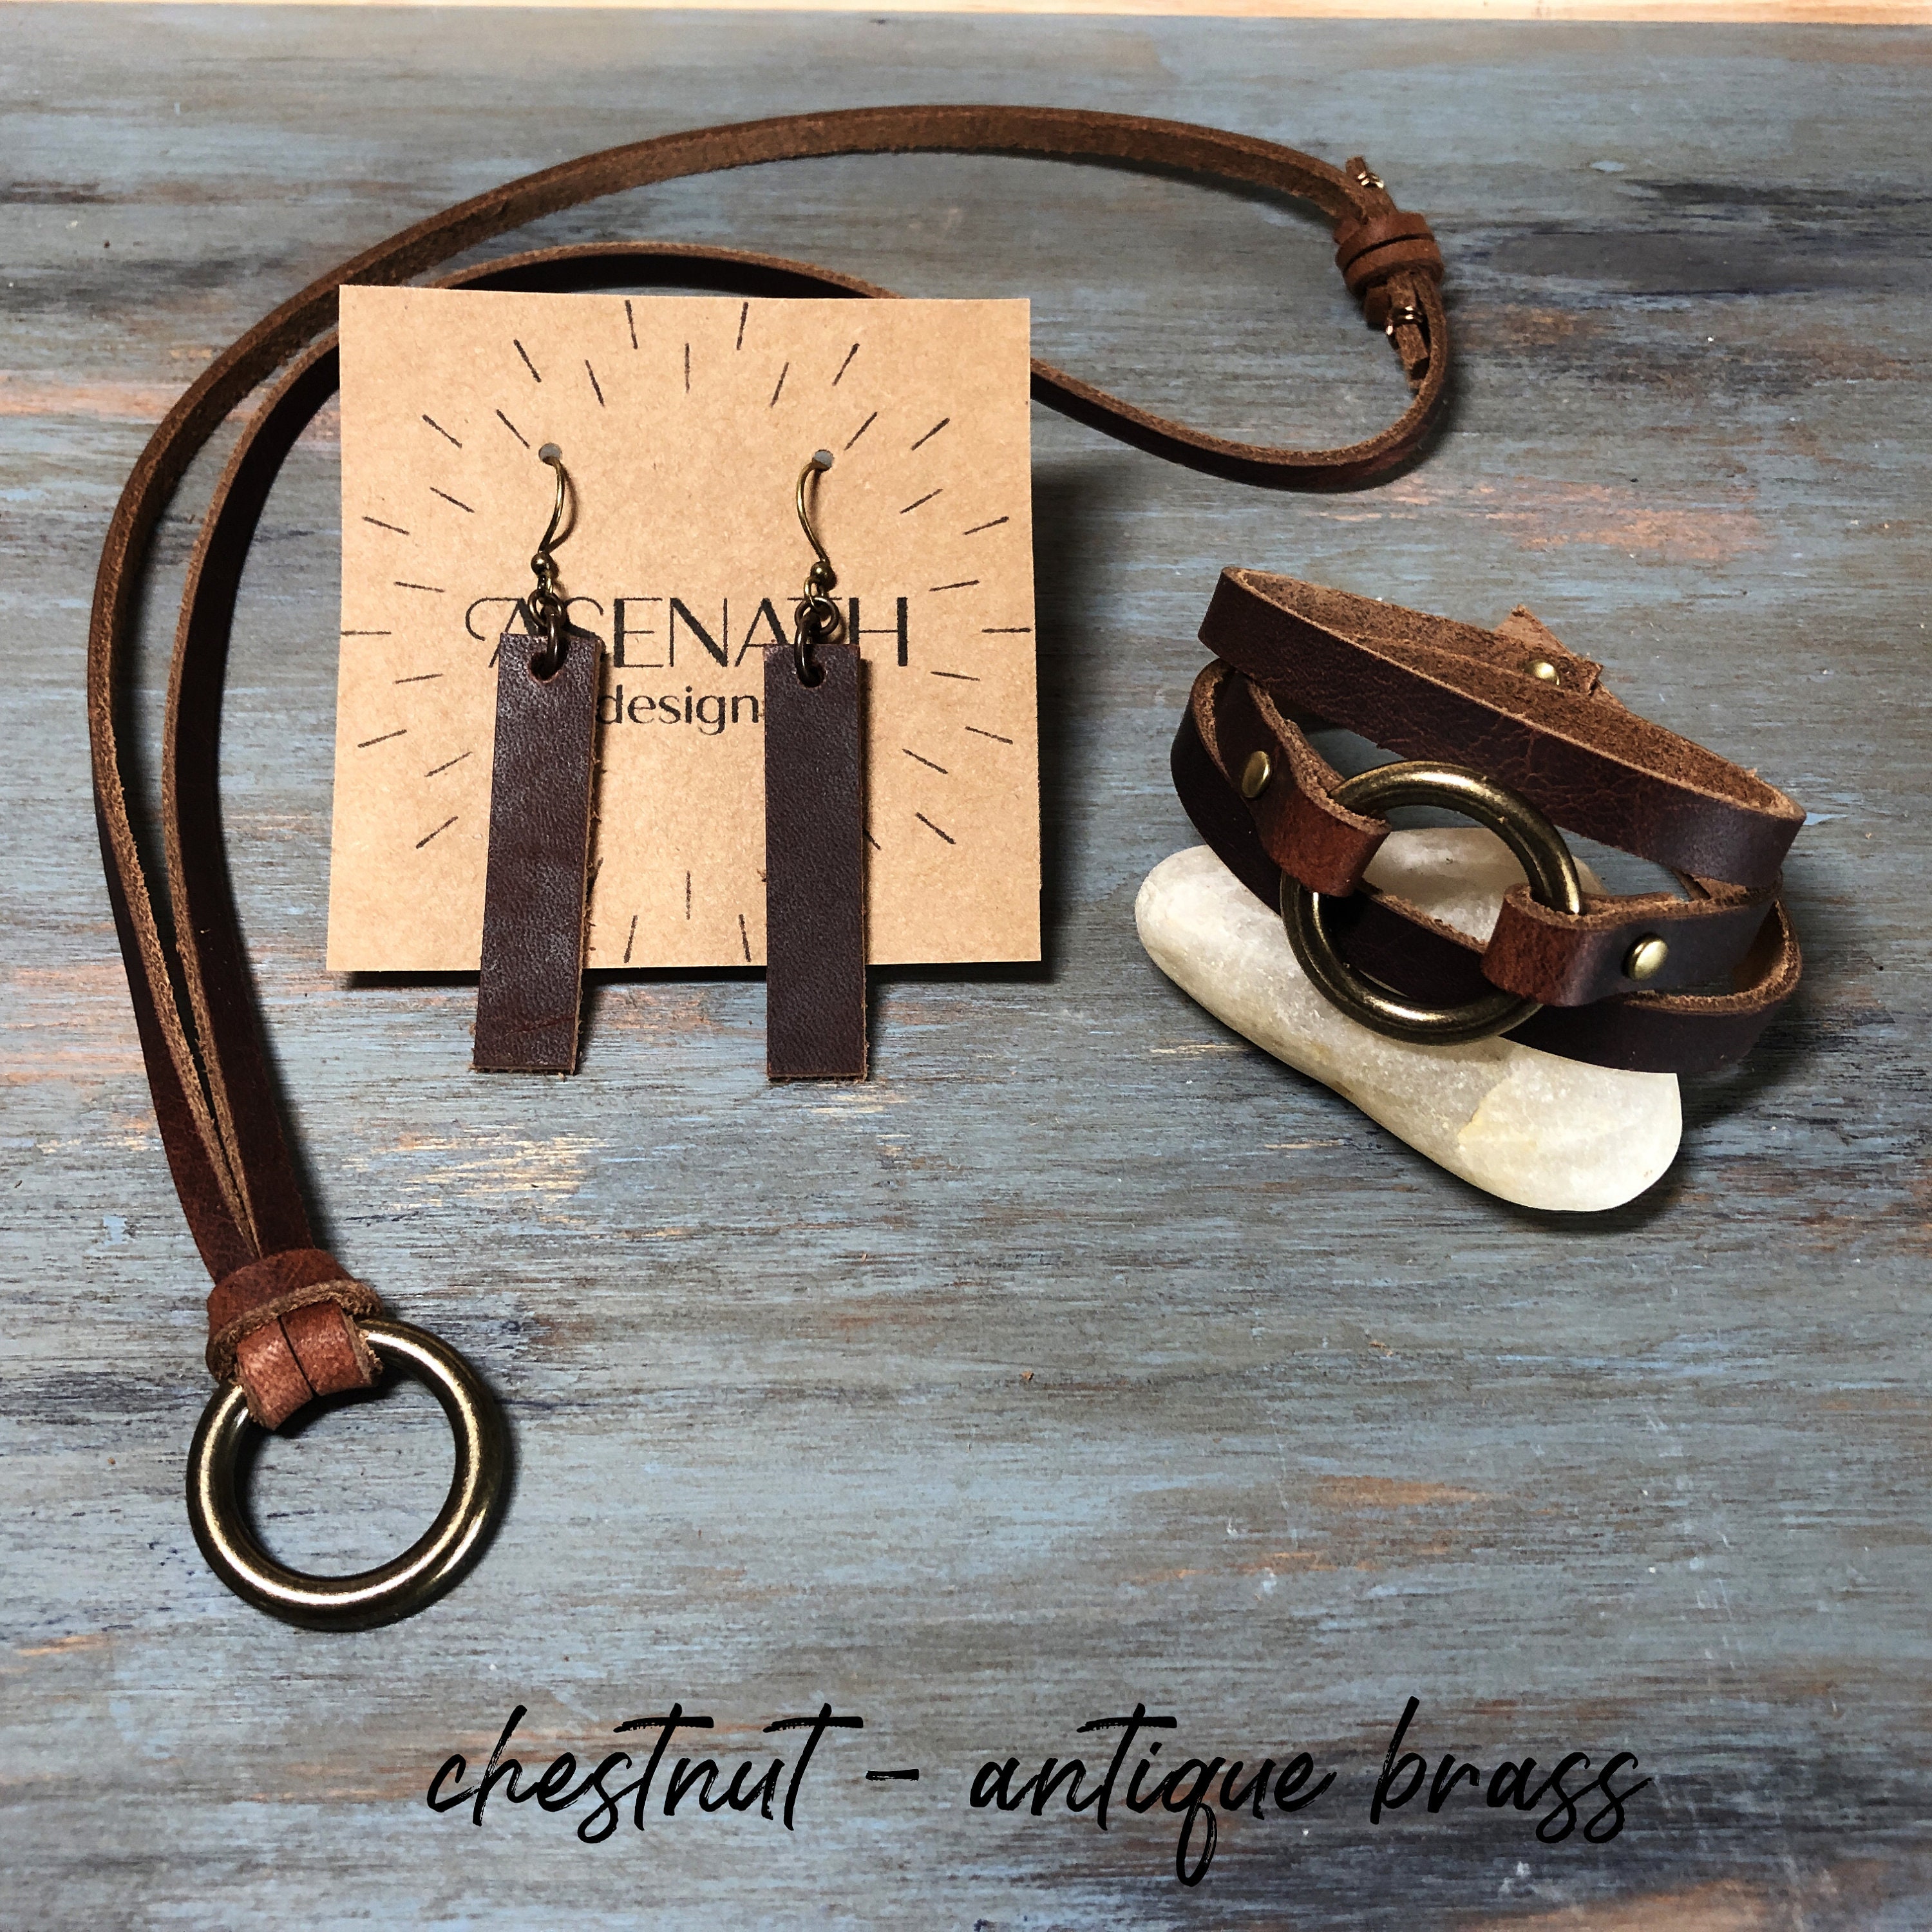 Petite Starlight Leather Bracelet Kit